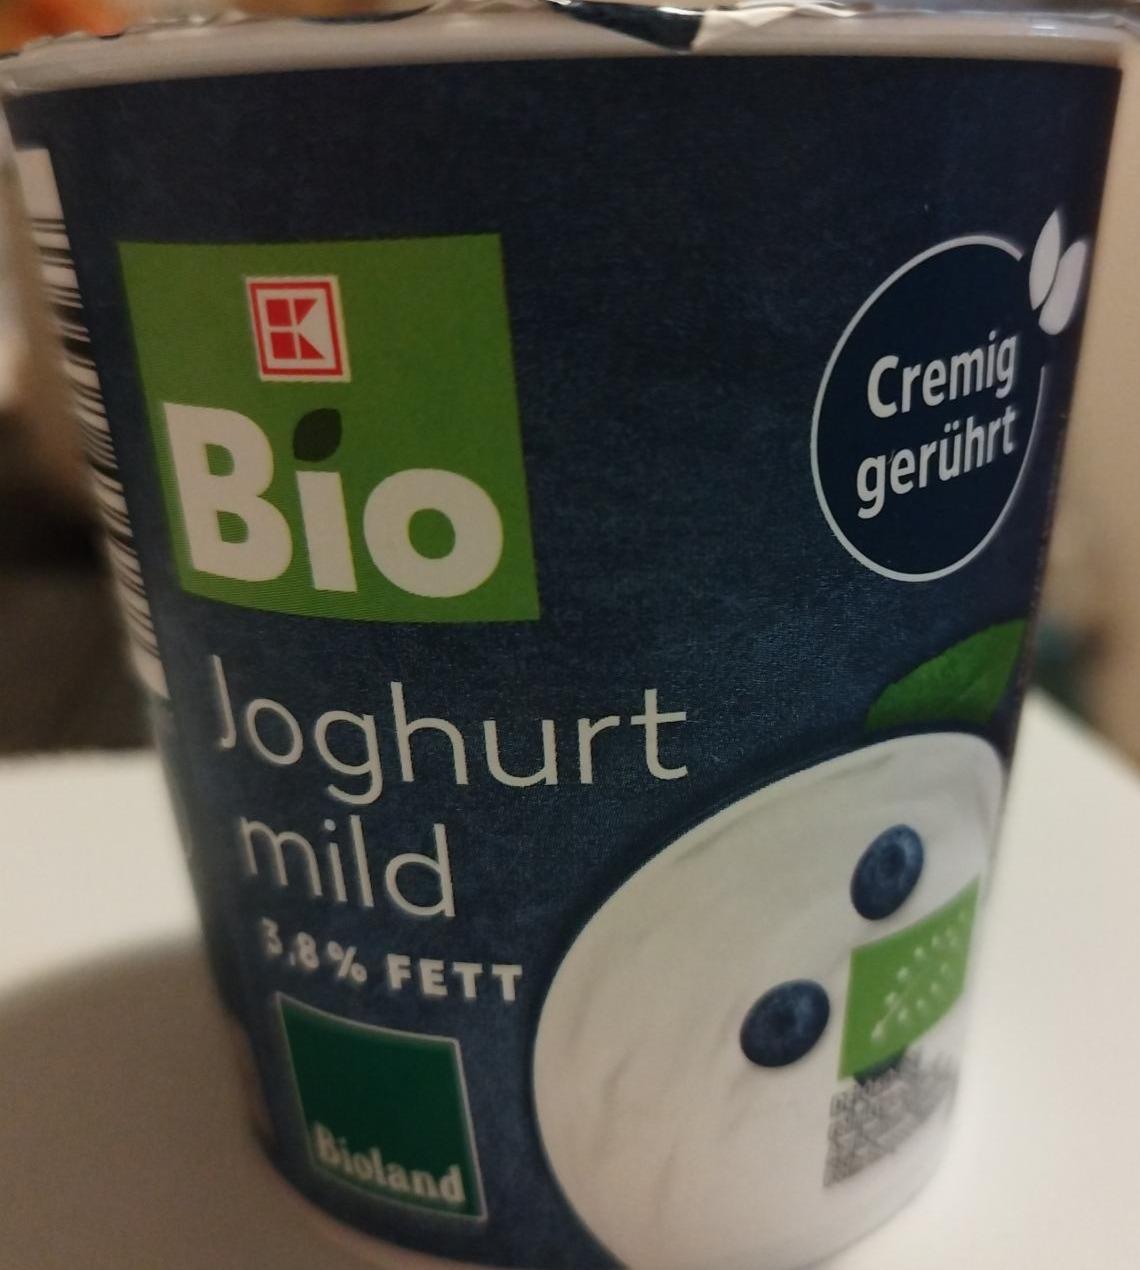 Joghurt mild 3,8% fett K-Bio - kalórie, kJ a nutričné hodnoty